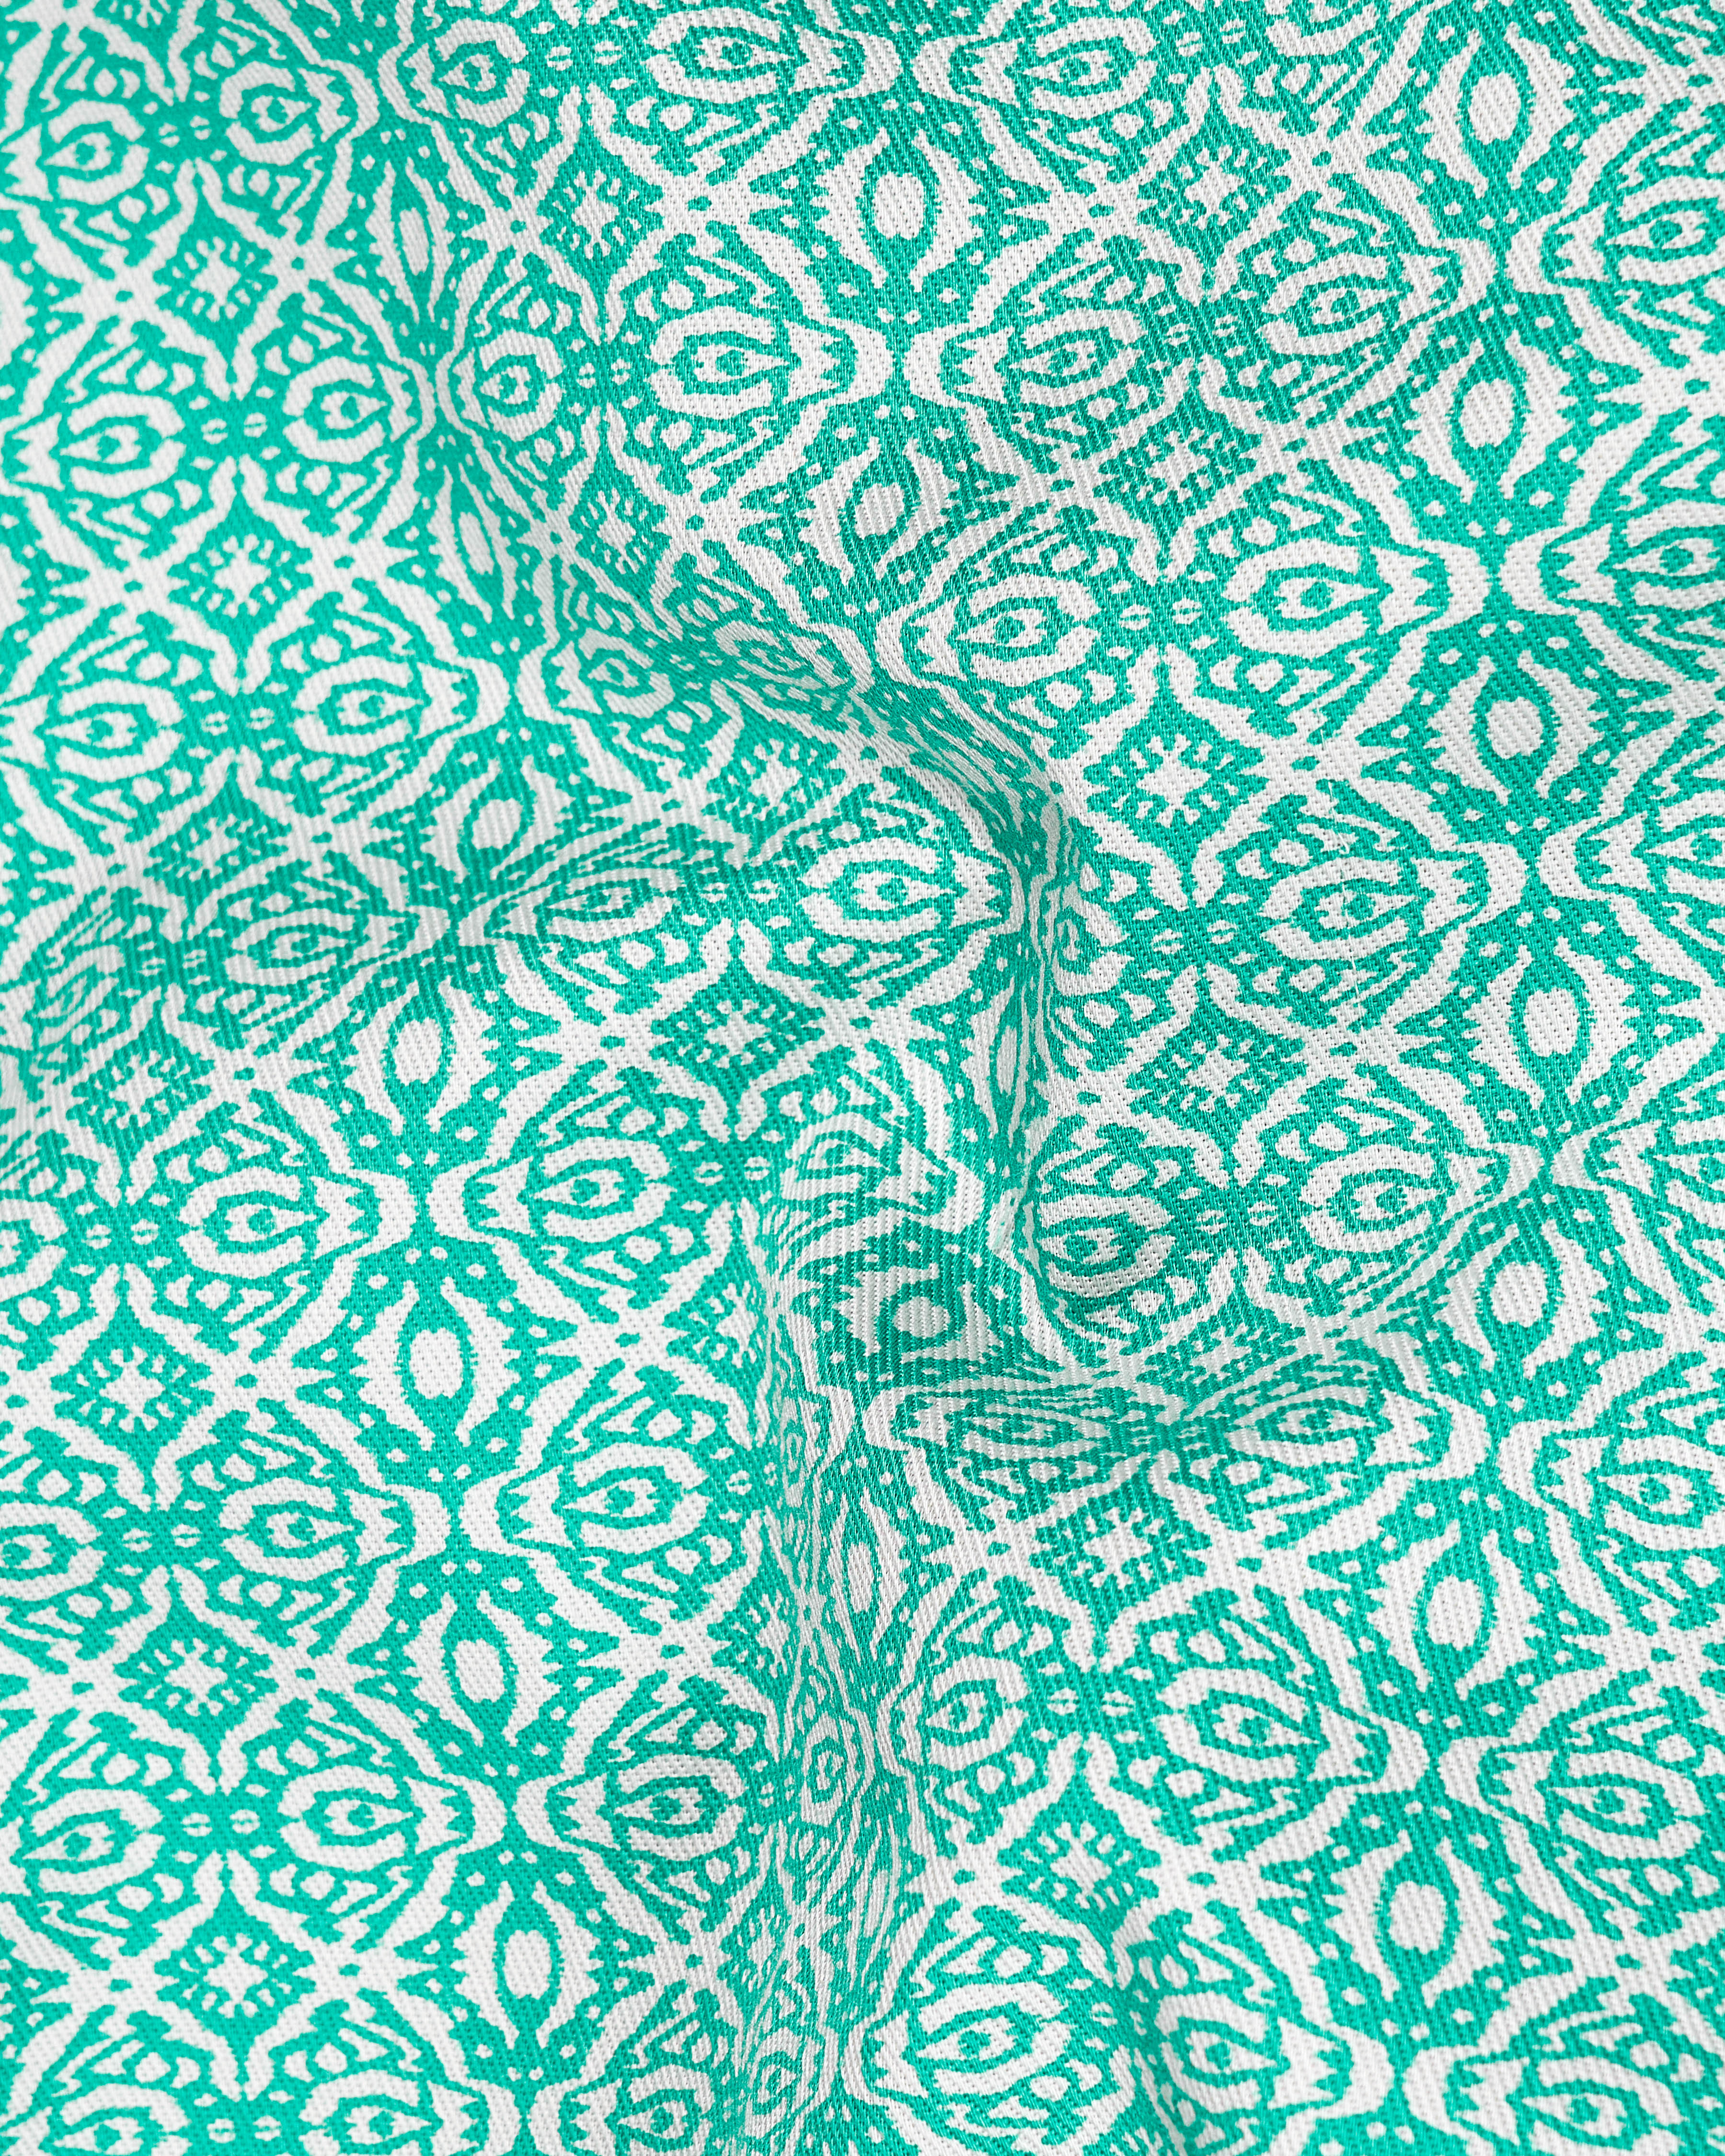 Persian Green Printed Royal Oxford Shirt 9303-38,9303-H-38,9303-39,9303-H-39,9303-40,9303-H-40,9303-42,9303-H-42,9303-44,9303-H-44,9303-46,9303-H-46,9303-48,9303-H-48,9303-50,9303-H-50,9303-52,9303-H-52